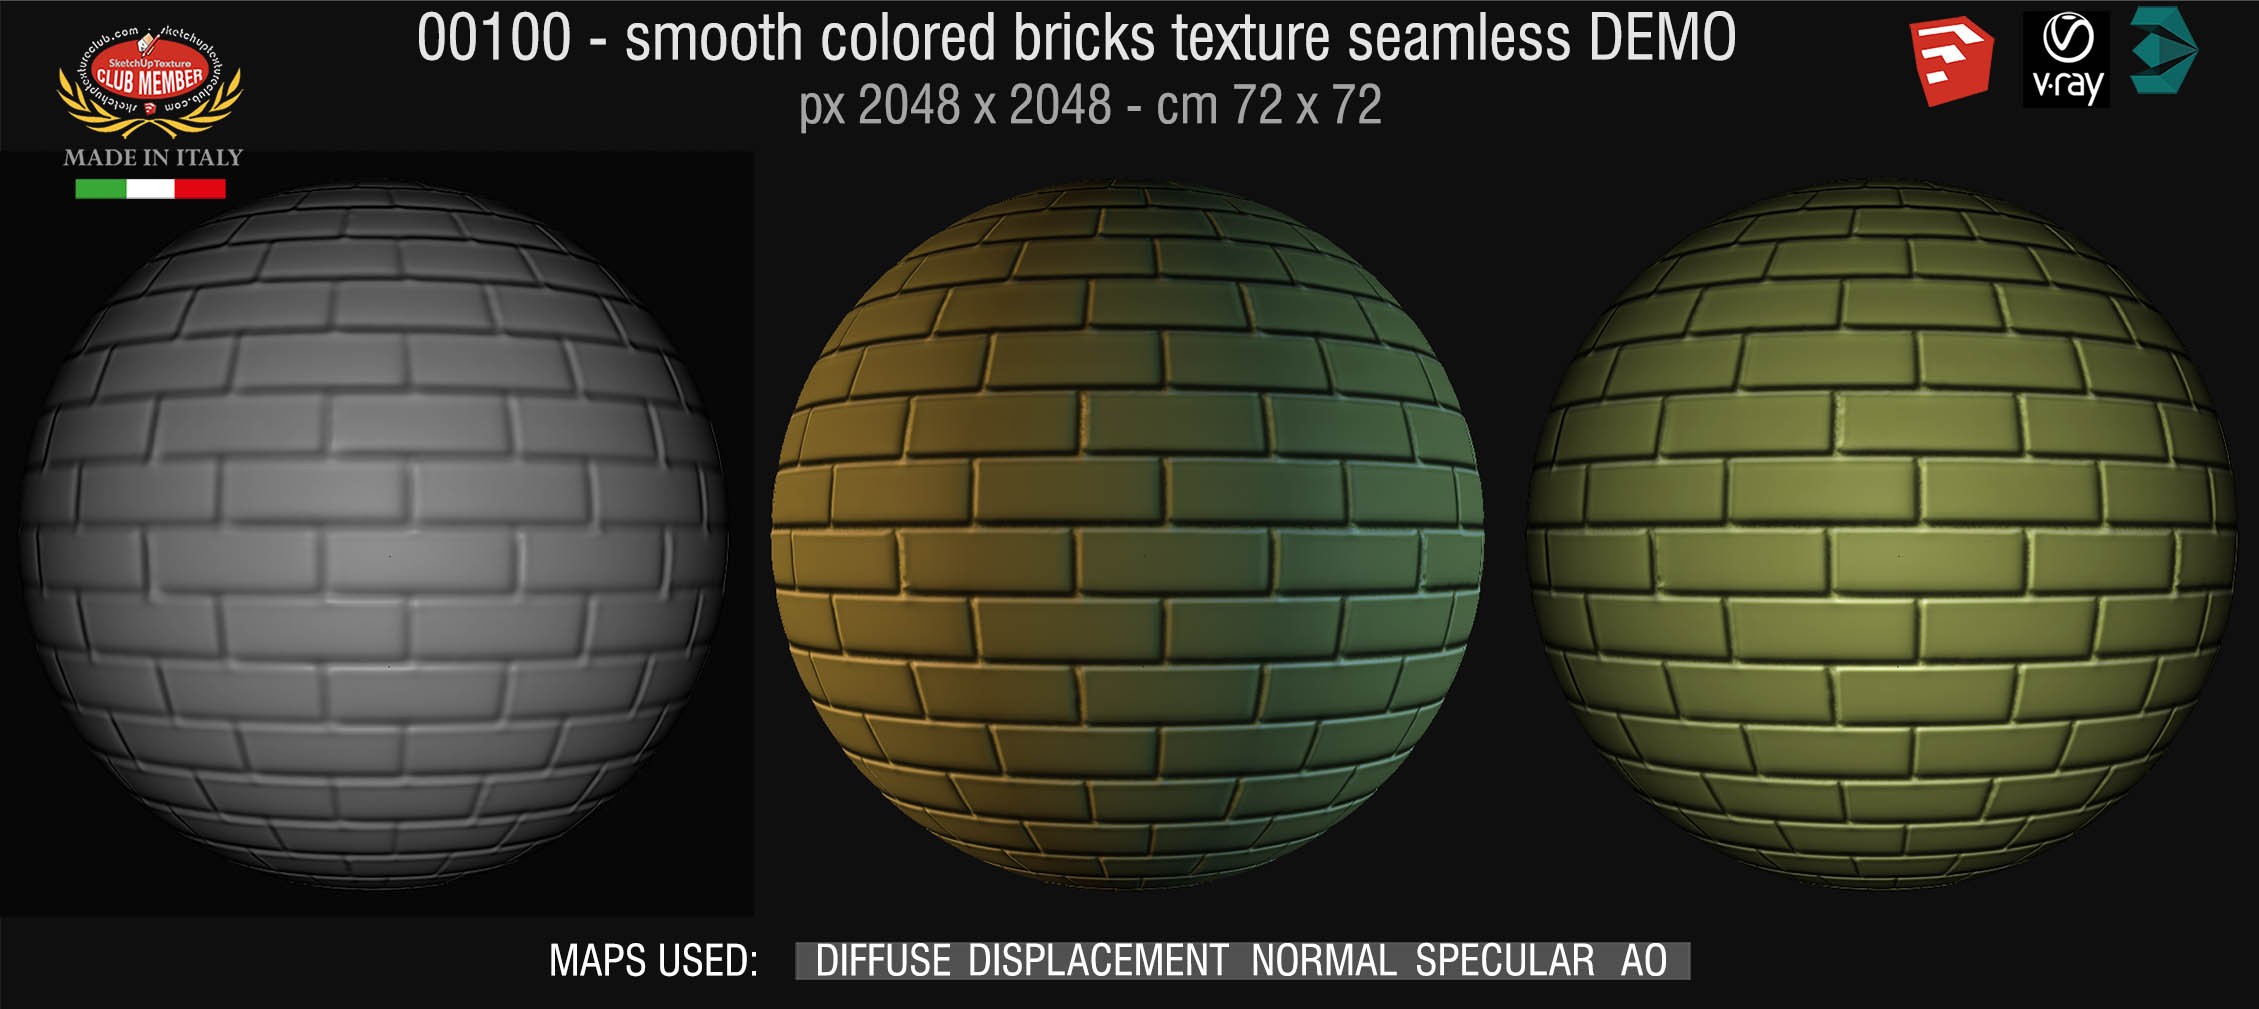 00100 smooth colored bricks texture seamless + maps DEMO